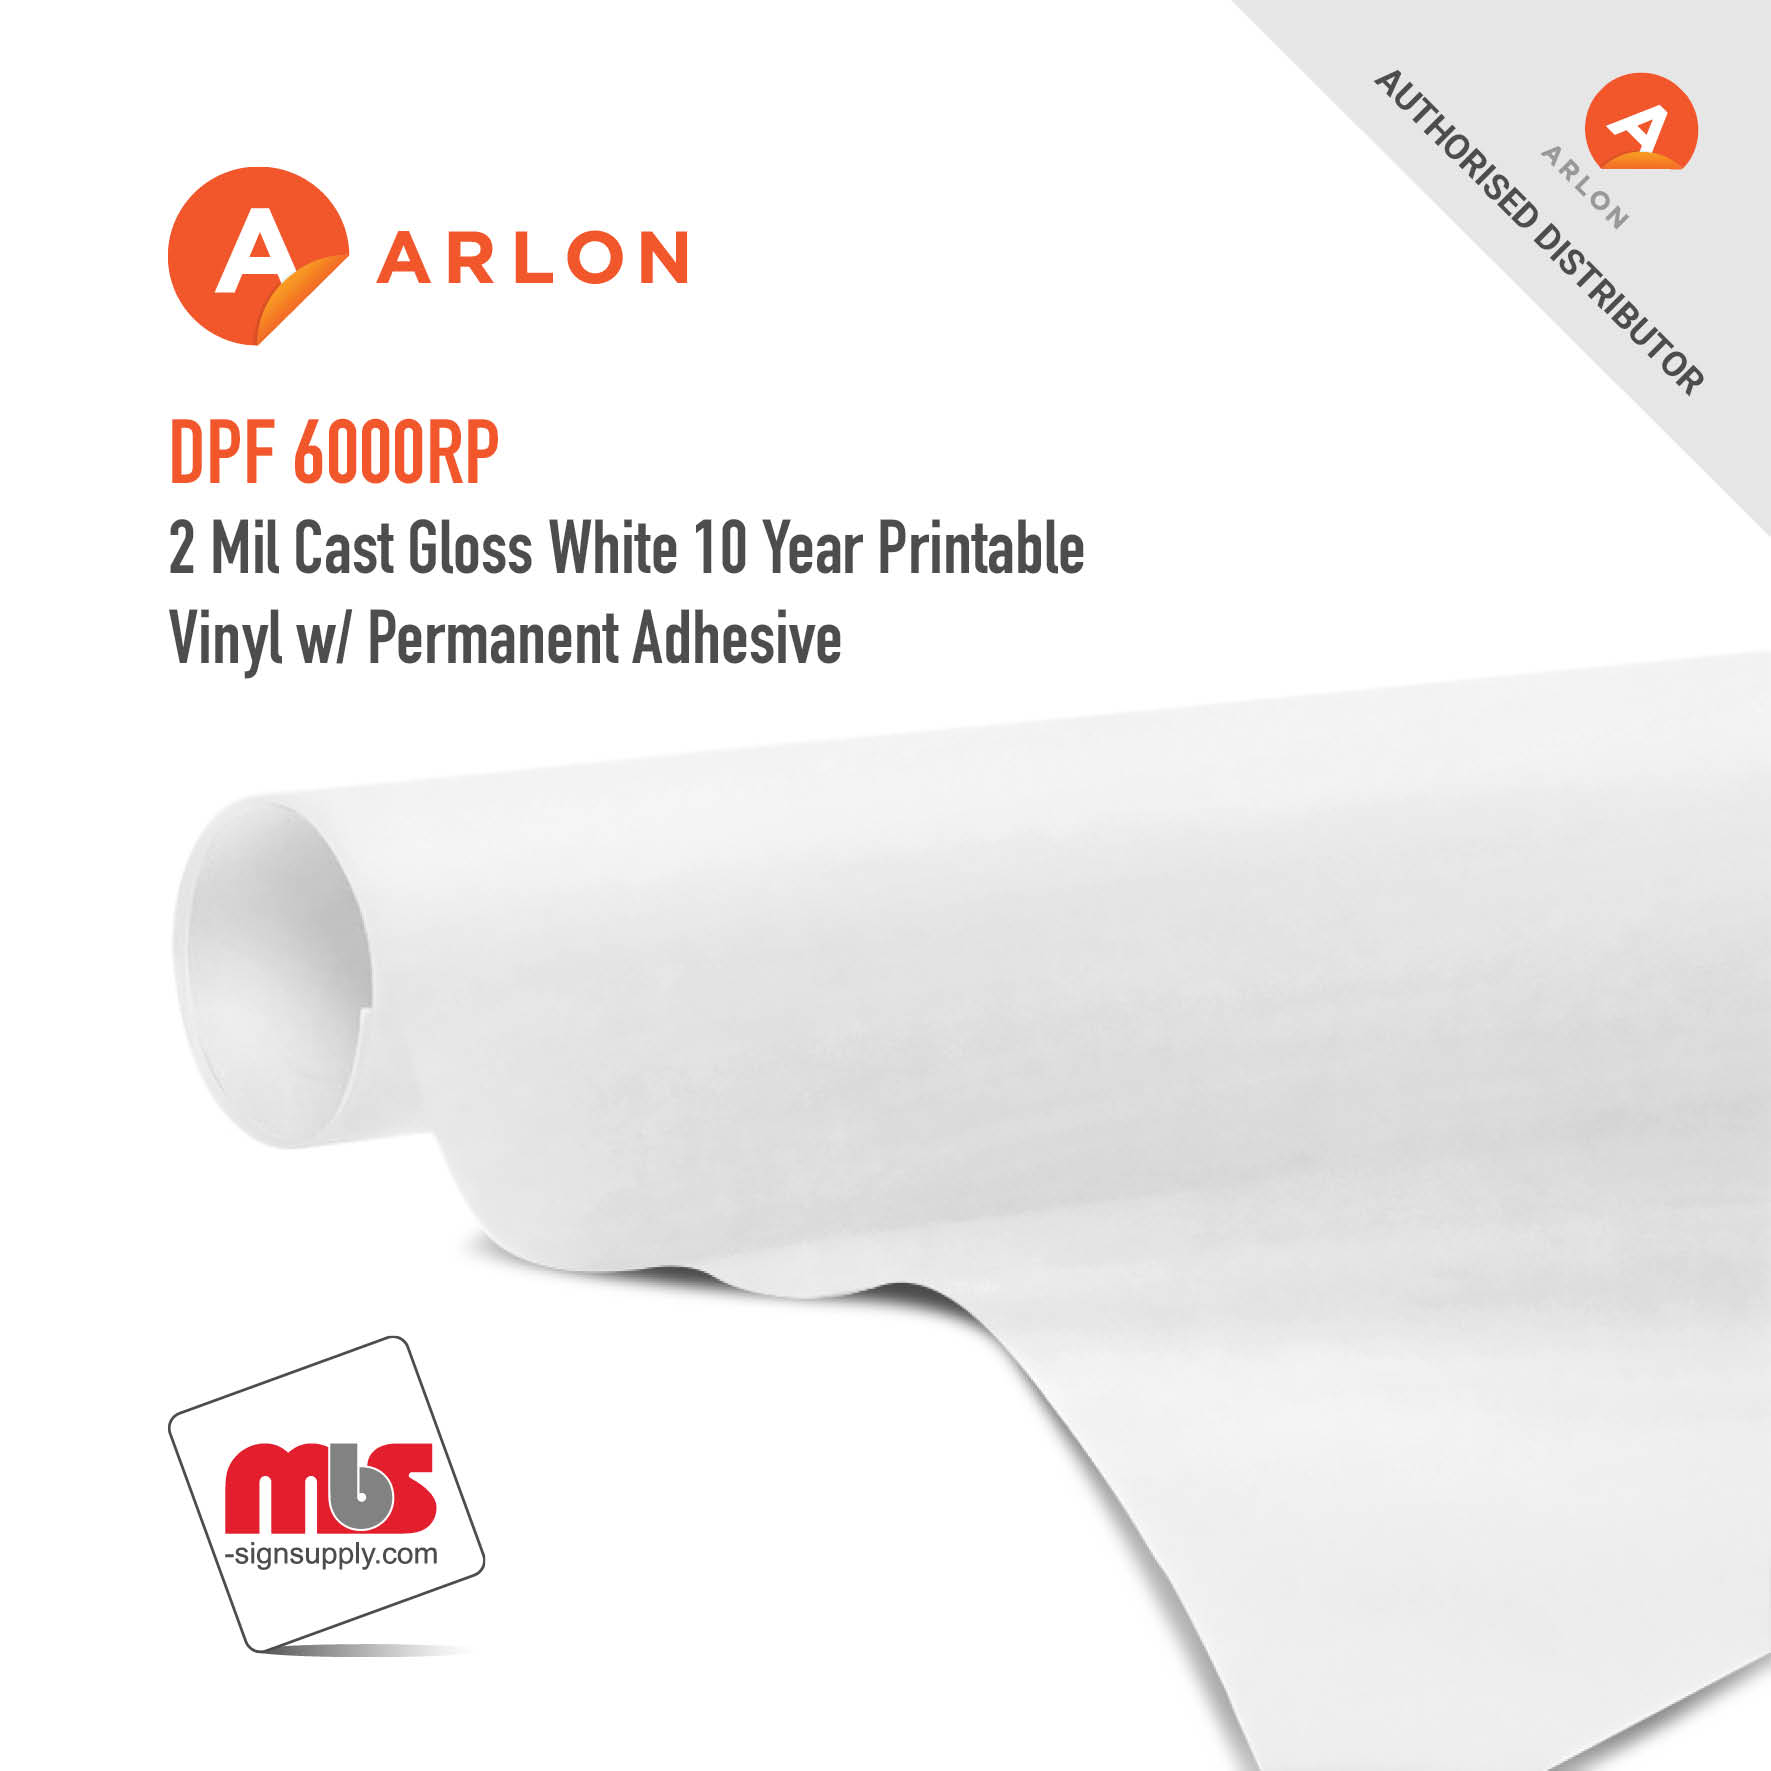 30'' x 50 Yard Roll - Arlon DPF 6000RP 2 Mil Cast Gloss White 10 Year Printable Vinyl w/ Permanent Adhesive